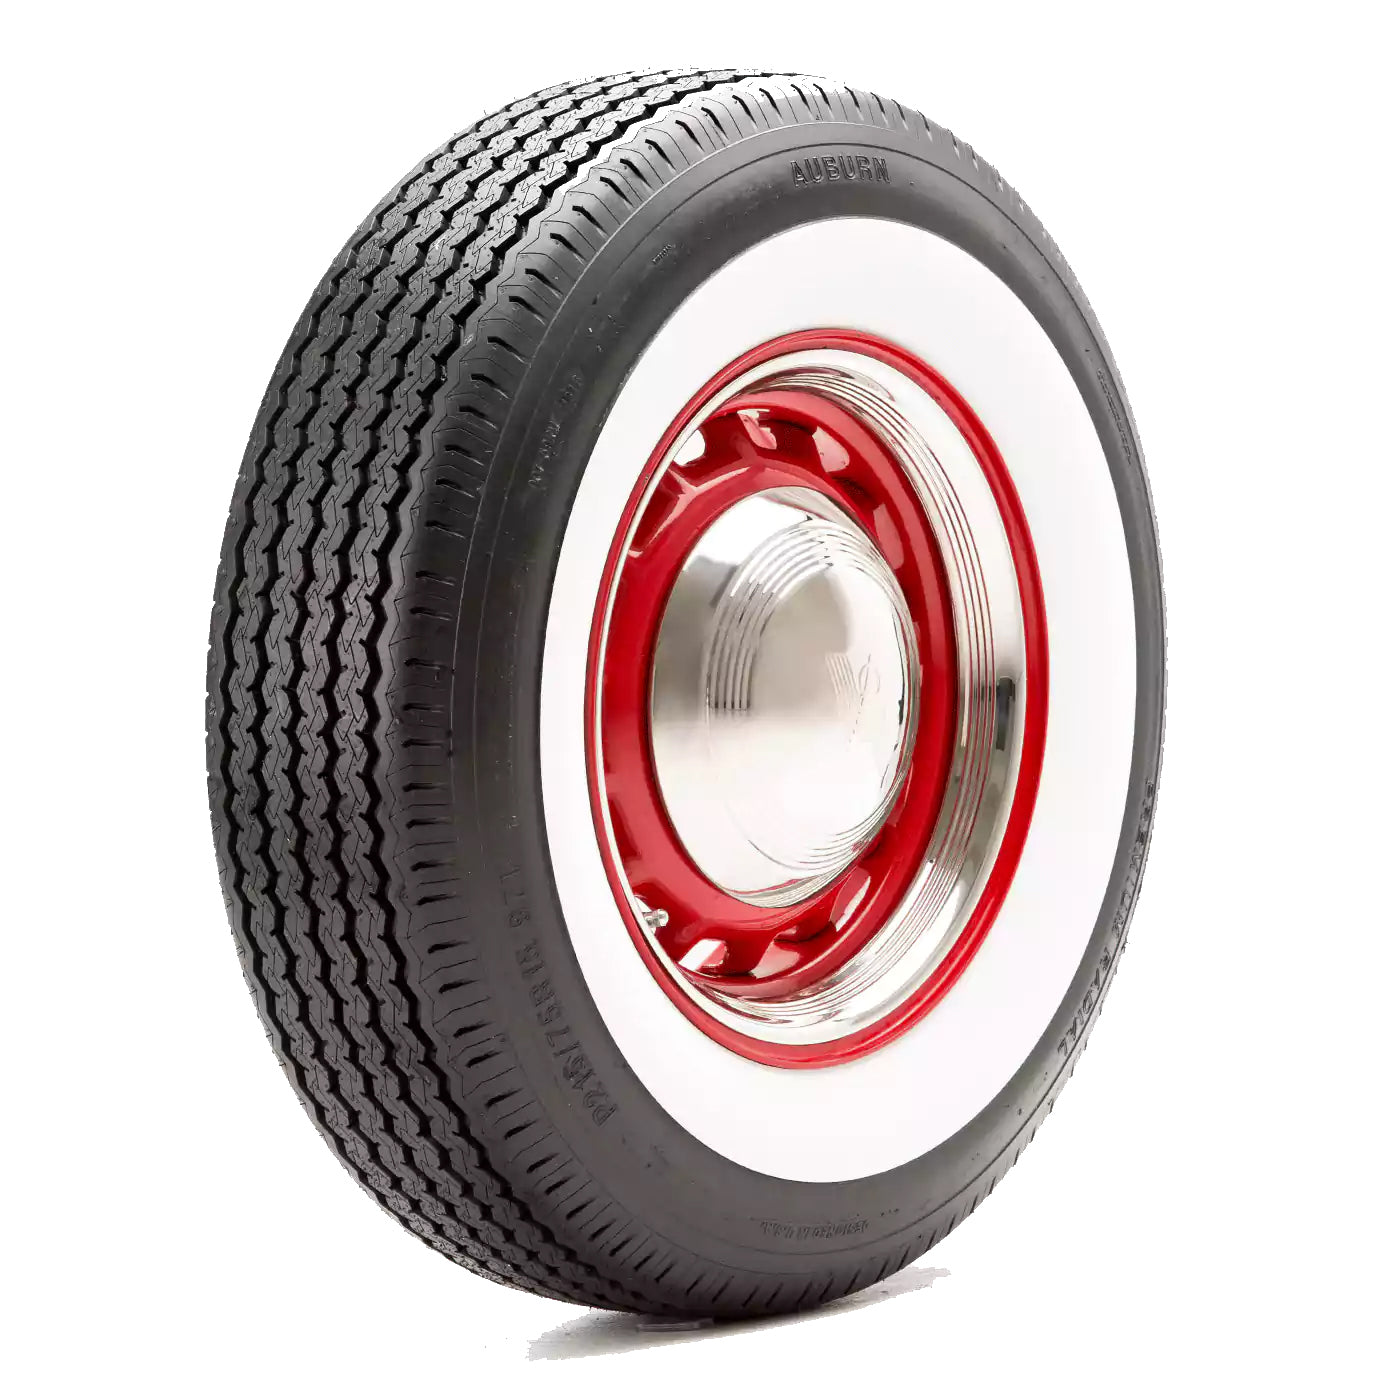 Auburn Radial 3 1/2" Whitewall Tyre 235/75R15